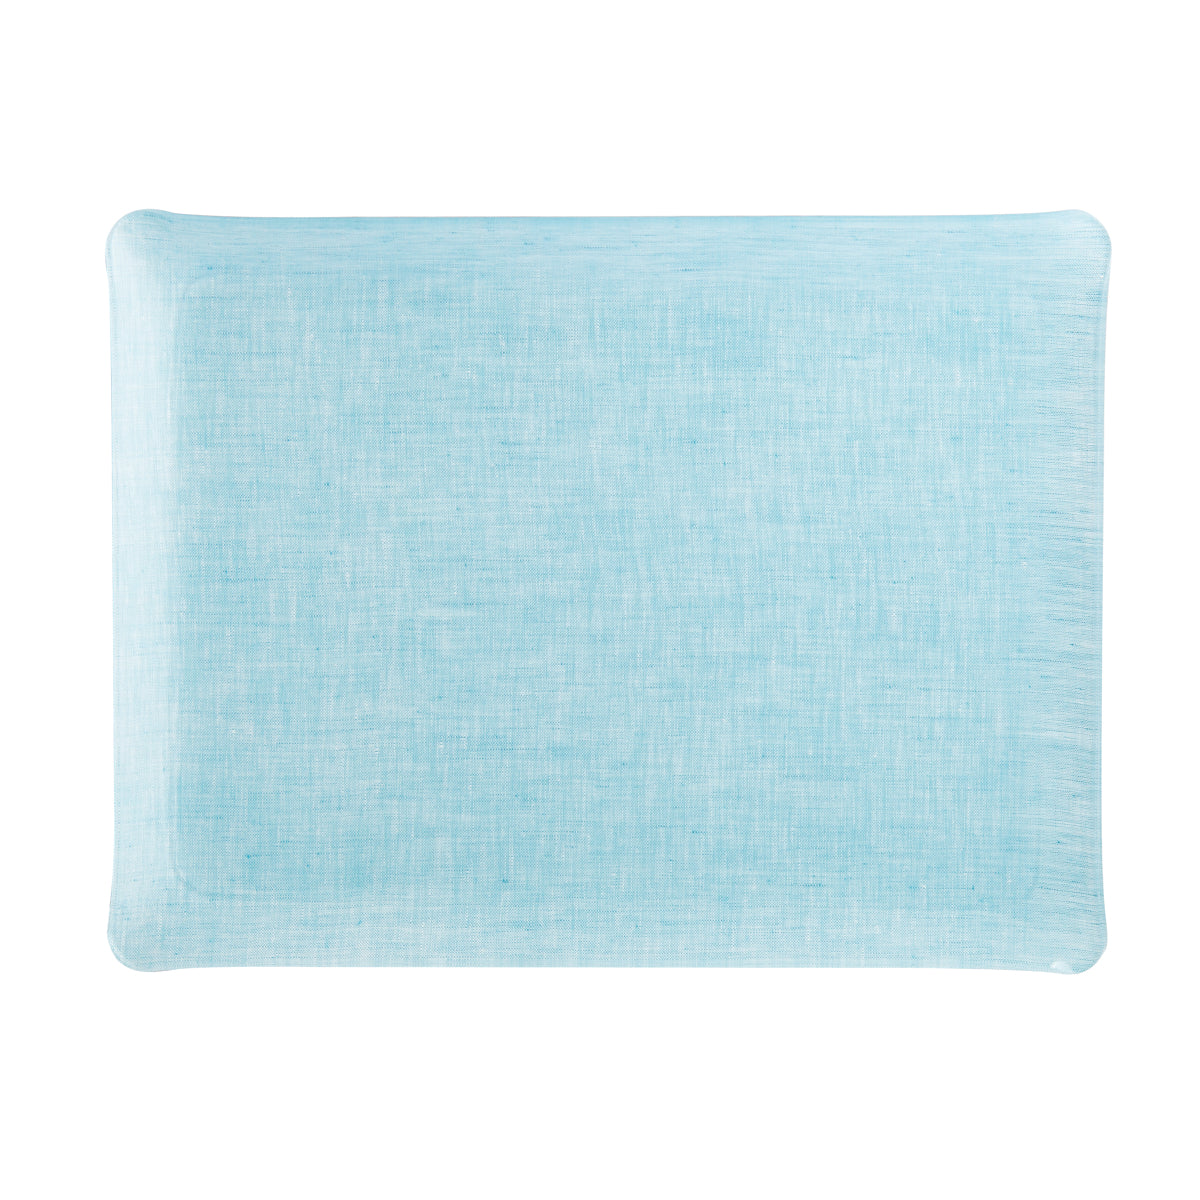 Nina Campbell Fabric Tray Medium - Aquamarine